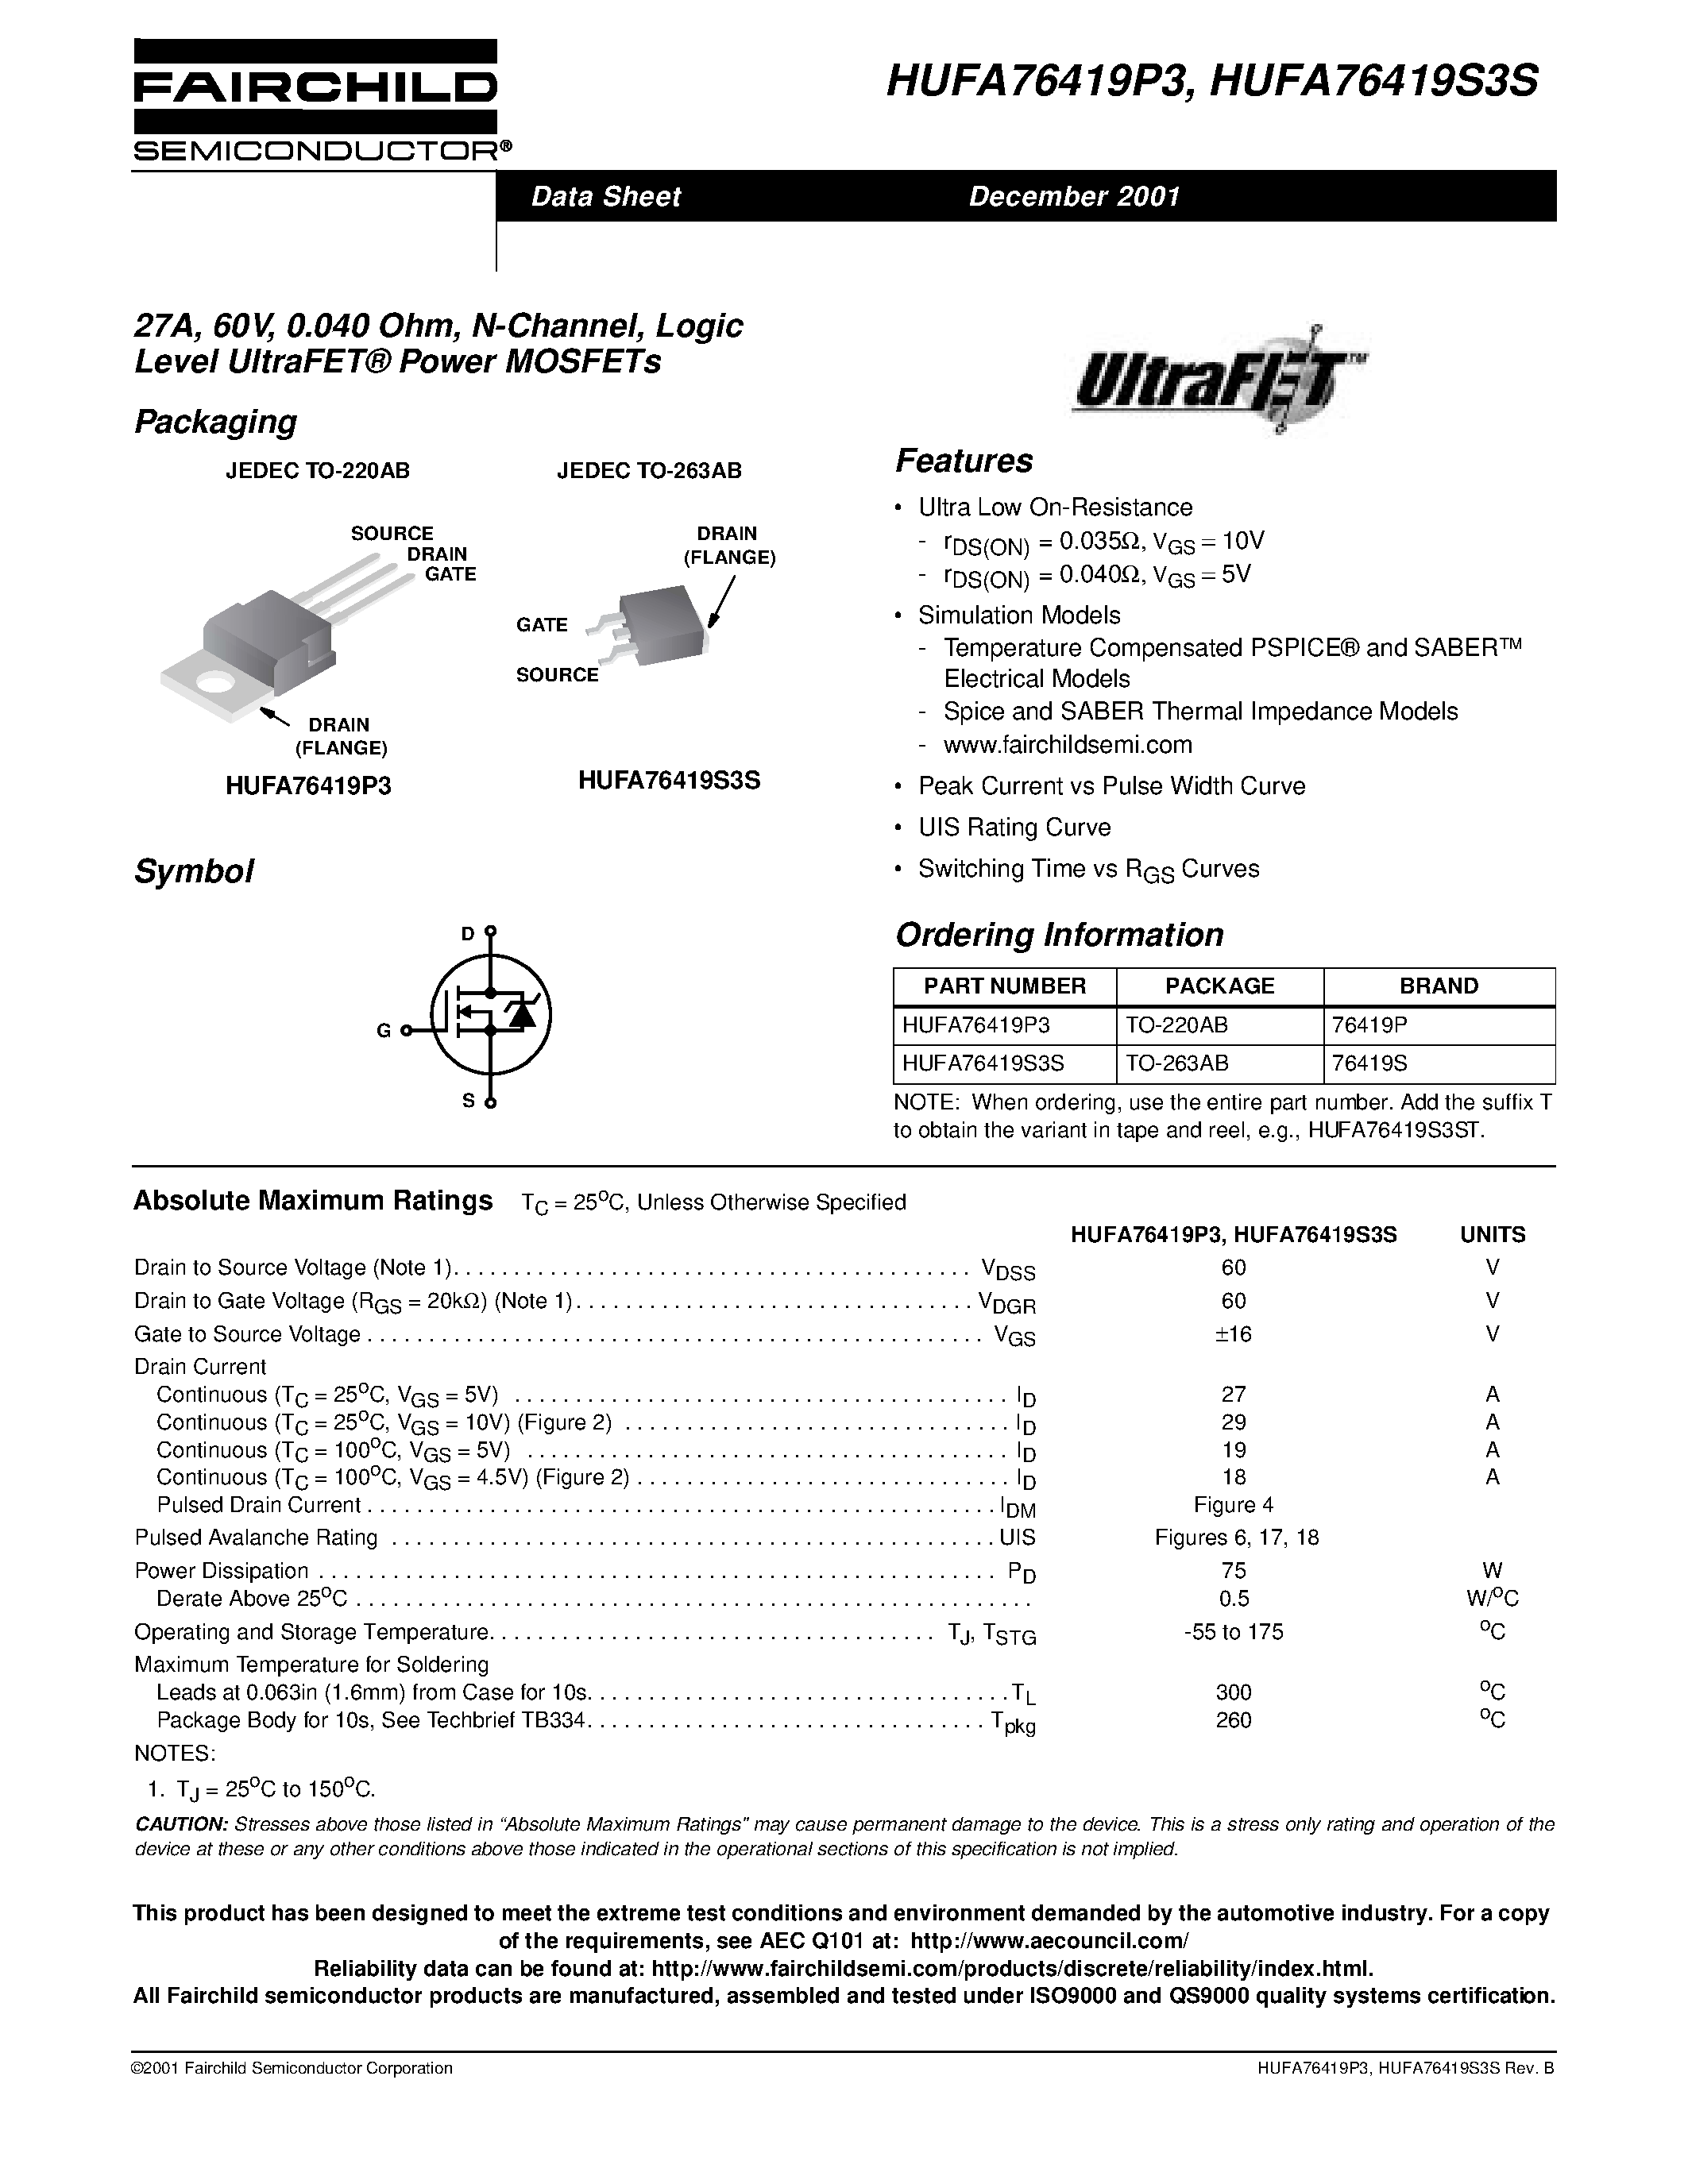 Даташит HUFA76419P3 - 27A/ 60V/ 0.040 Ohm/ N-Channel/ Logic Level UltraFET Power MOSFETs страница 1